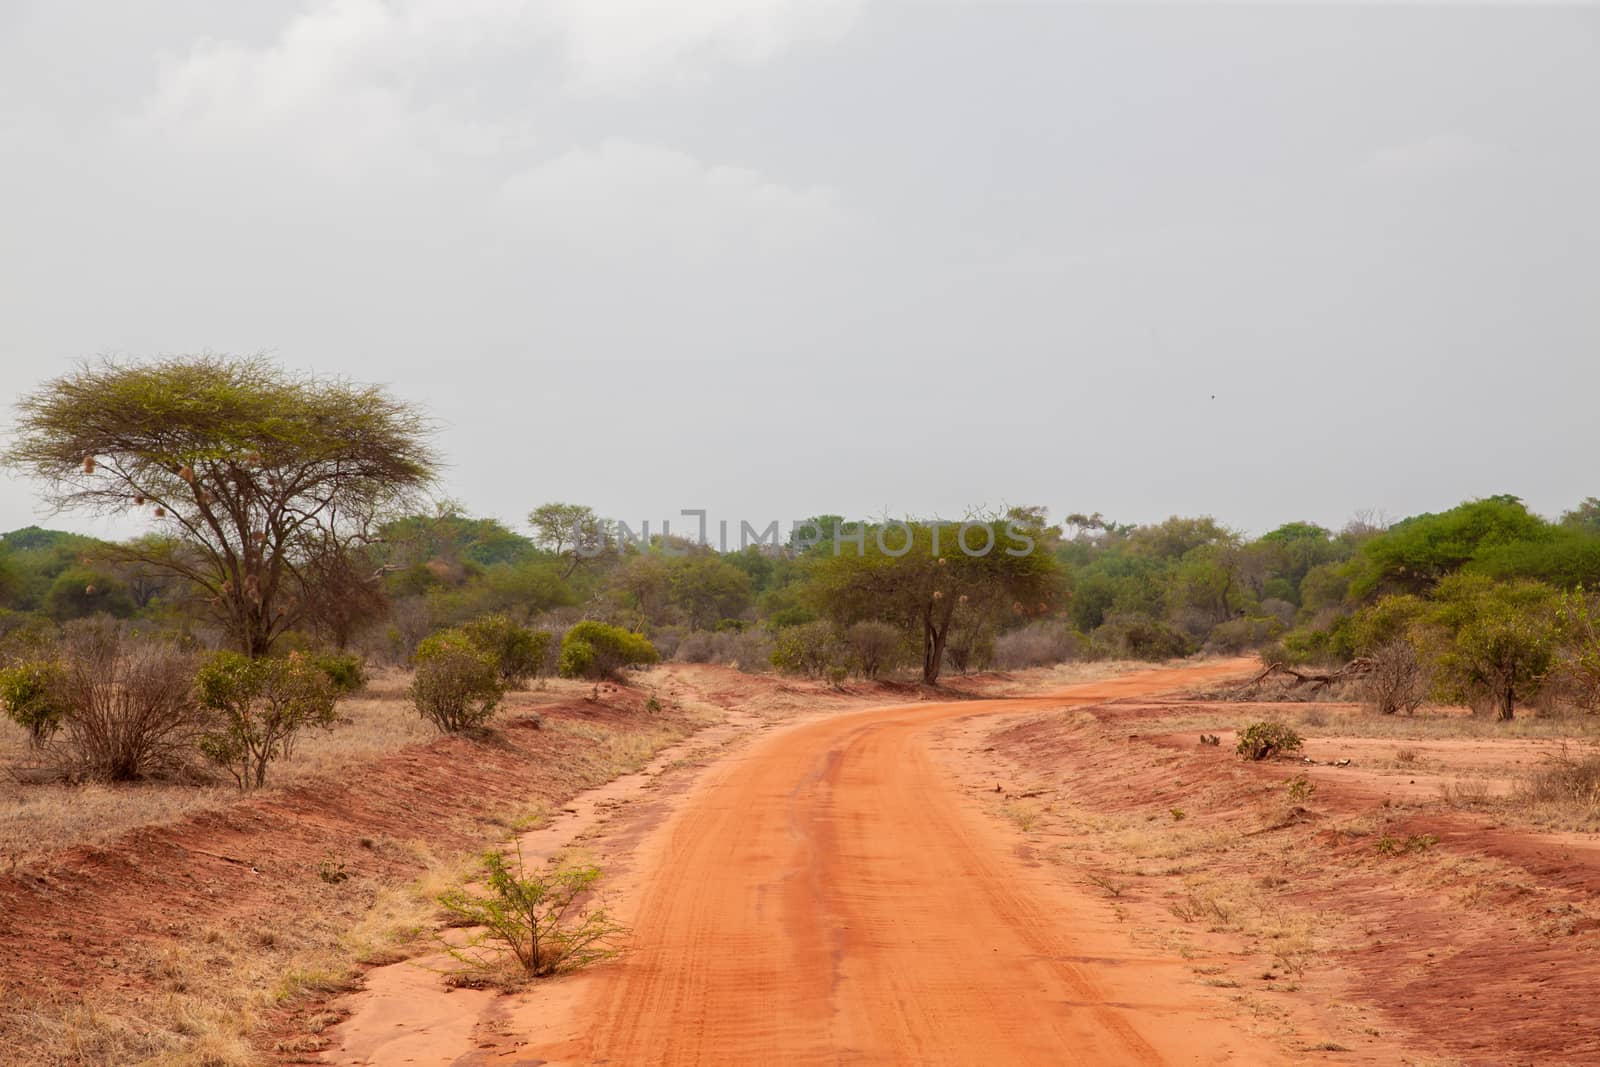 Landscape with red soil, on safari in Kenya